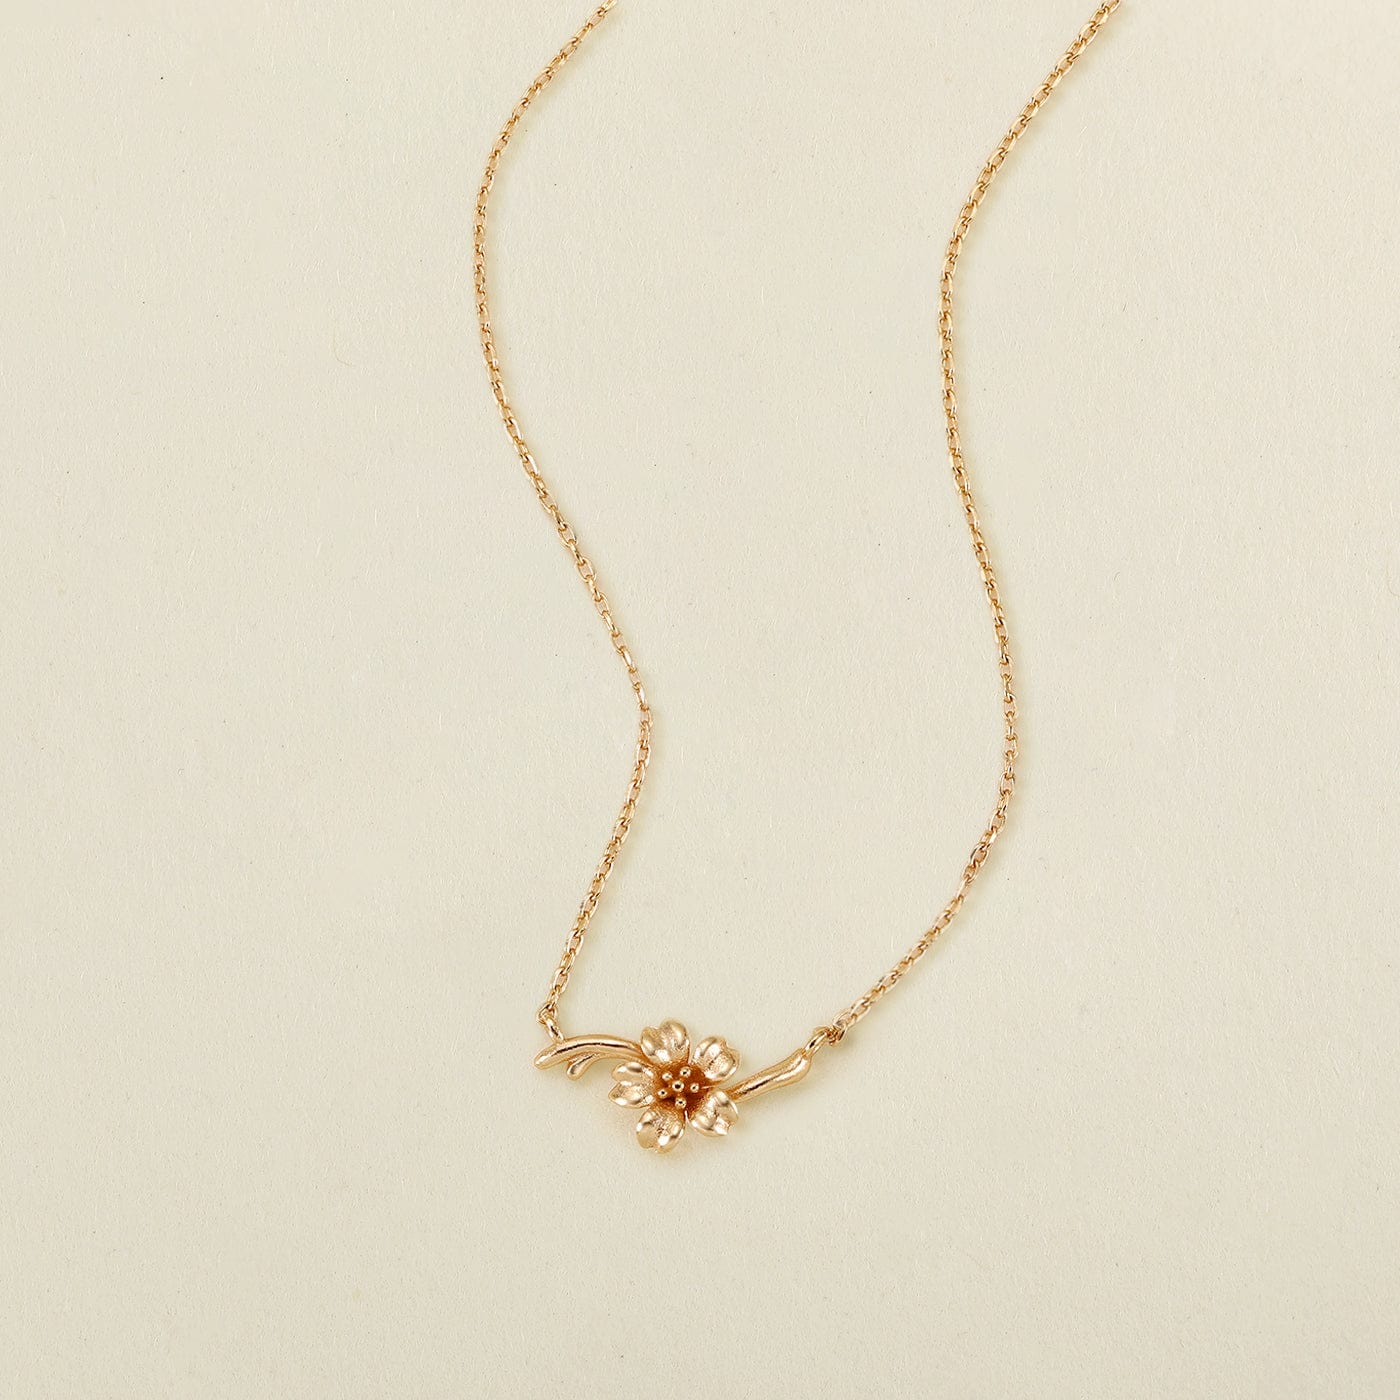 March Everbloom Birth Flower Necklace Gold Vermeil Necklace